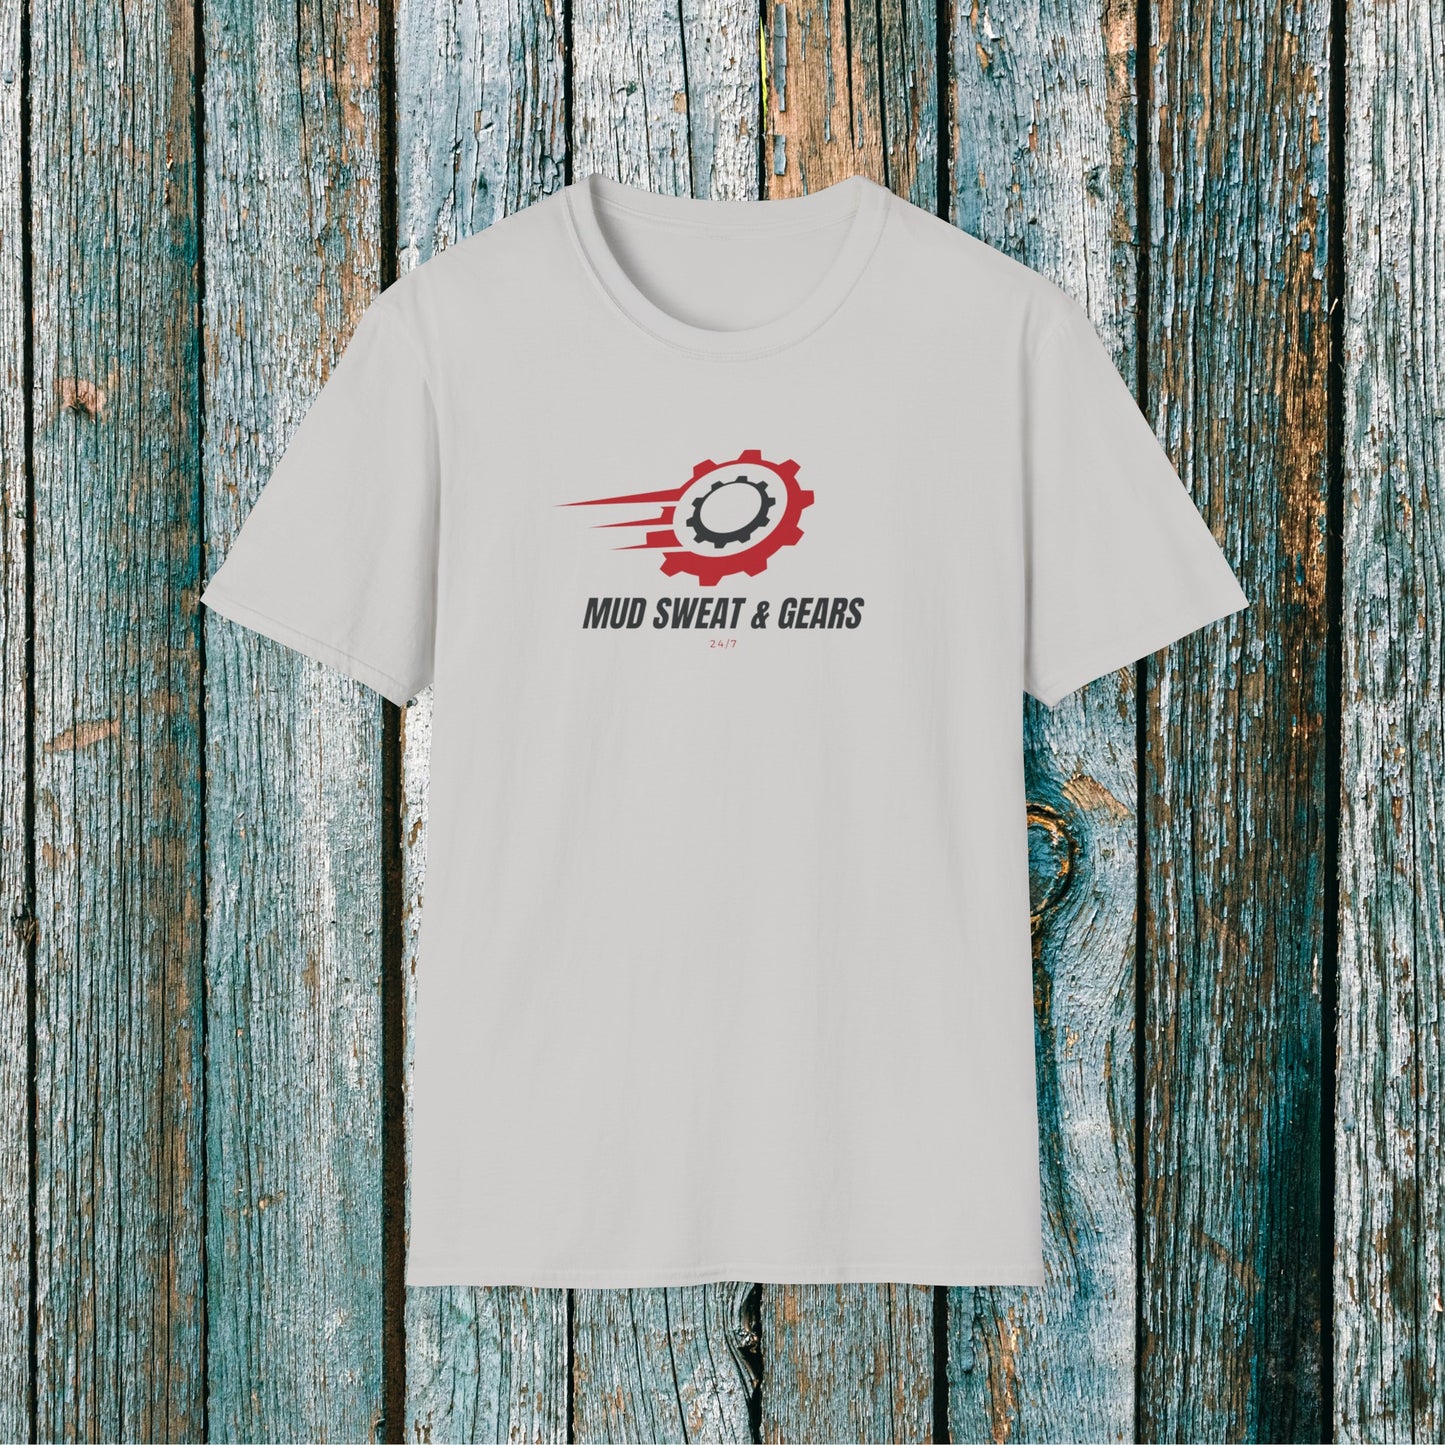 Mens ATV Shirt | Mud Sweat and Gears Shirts | SOFT Cotton Adult Unisex tee shirt | ATV racing shirt for men | Fourwheeler Riding Shirt | Dirt Bike Shirt for Men